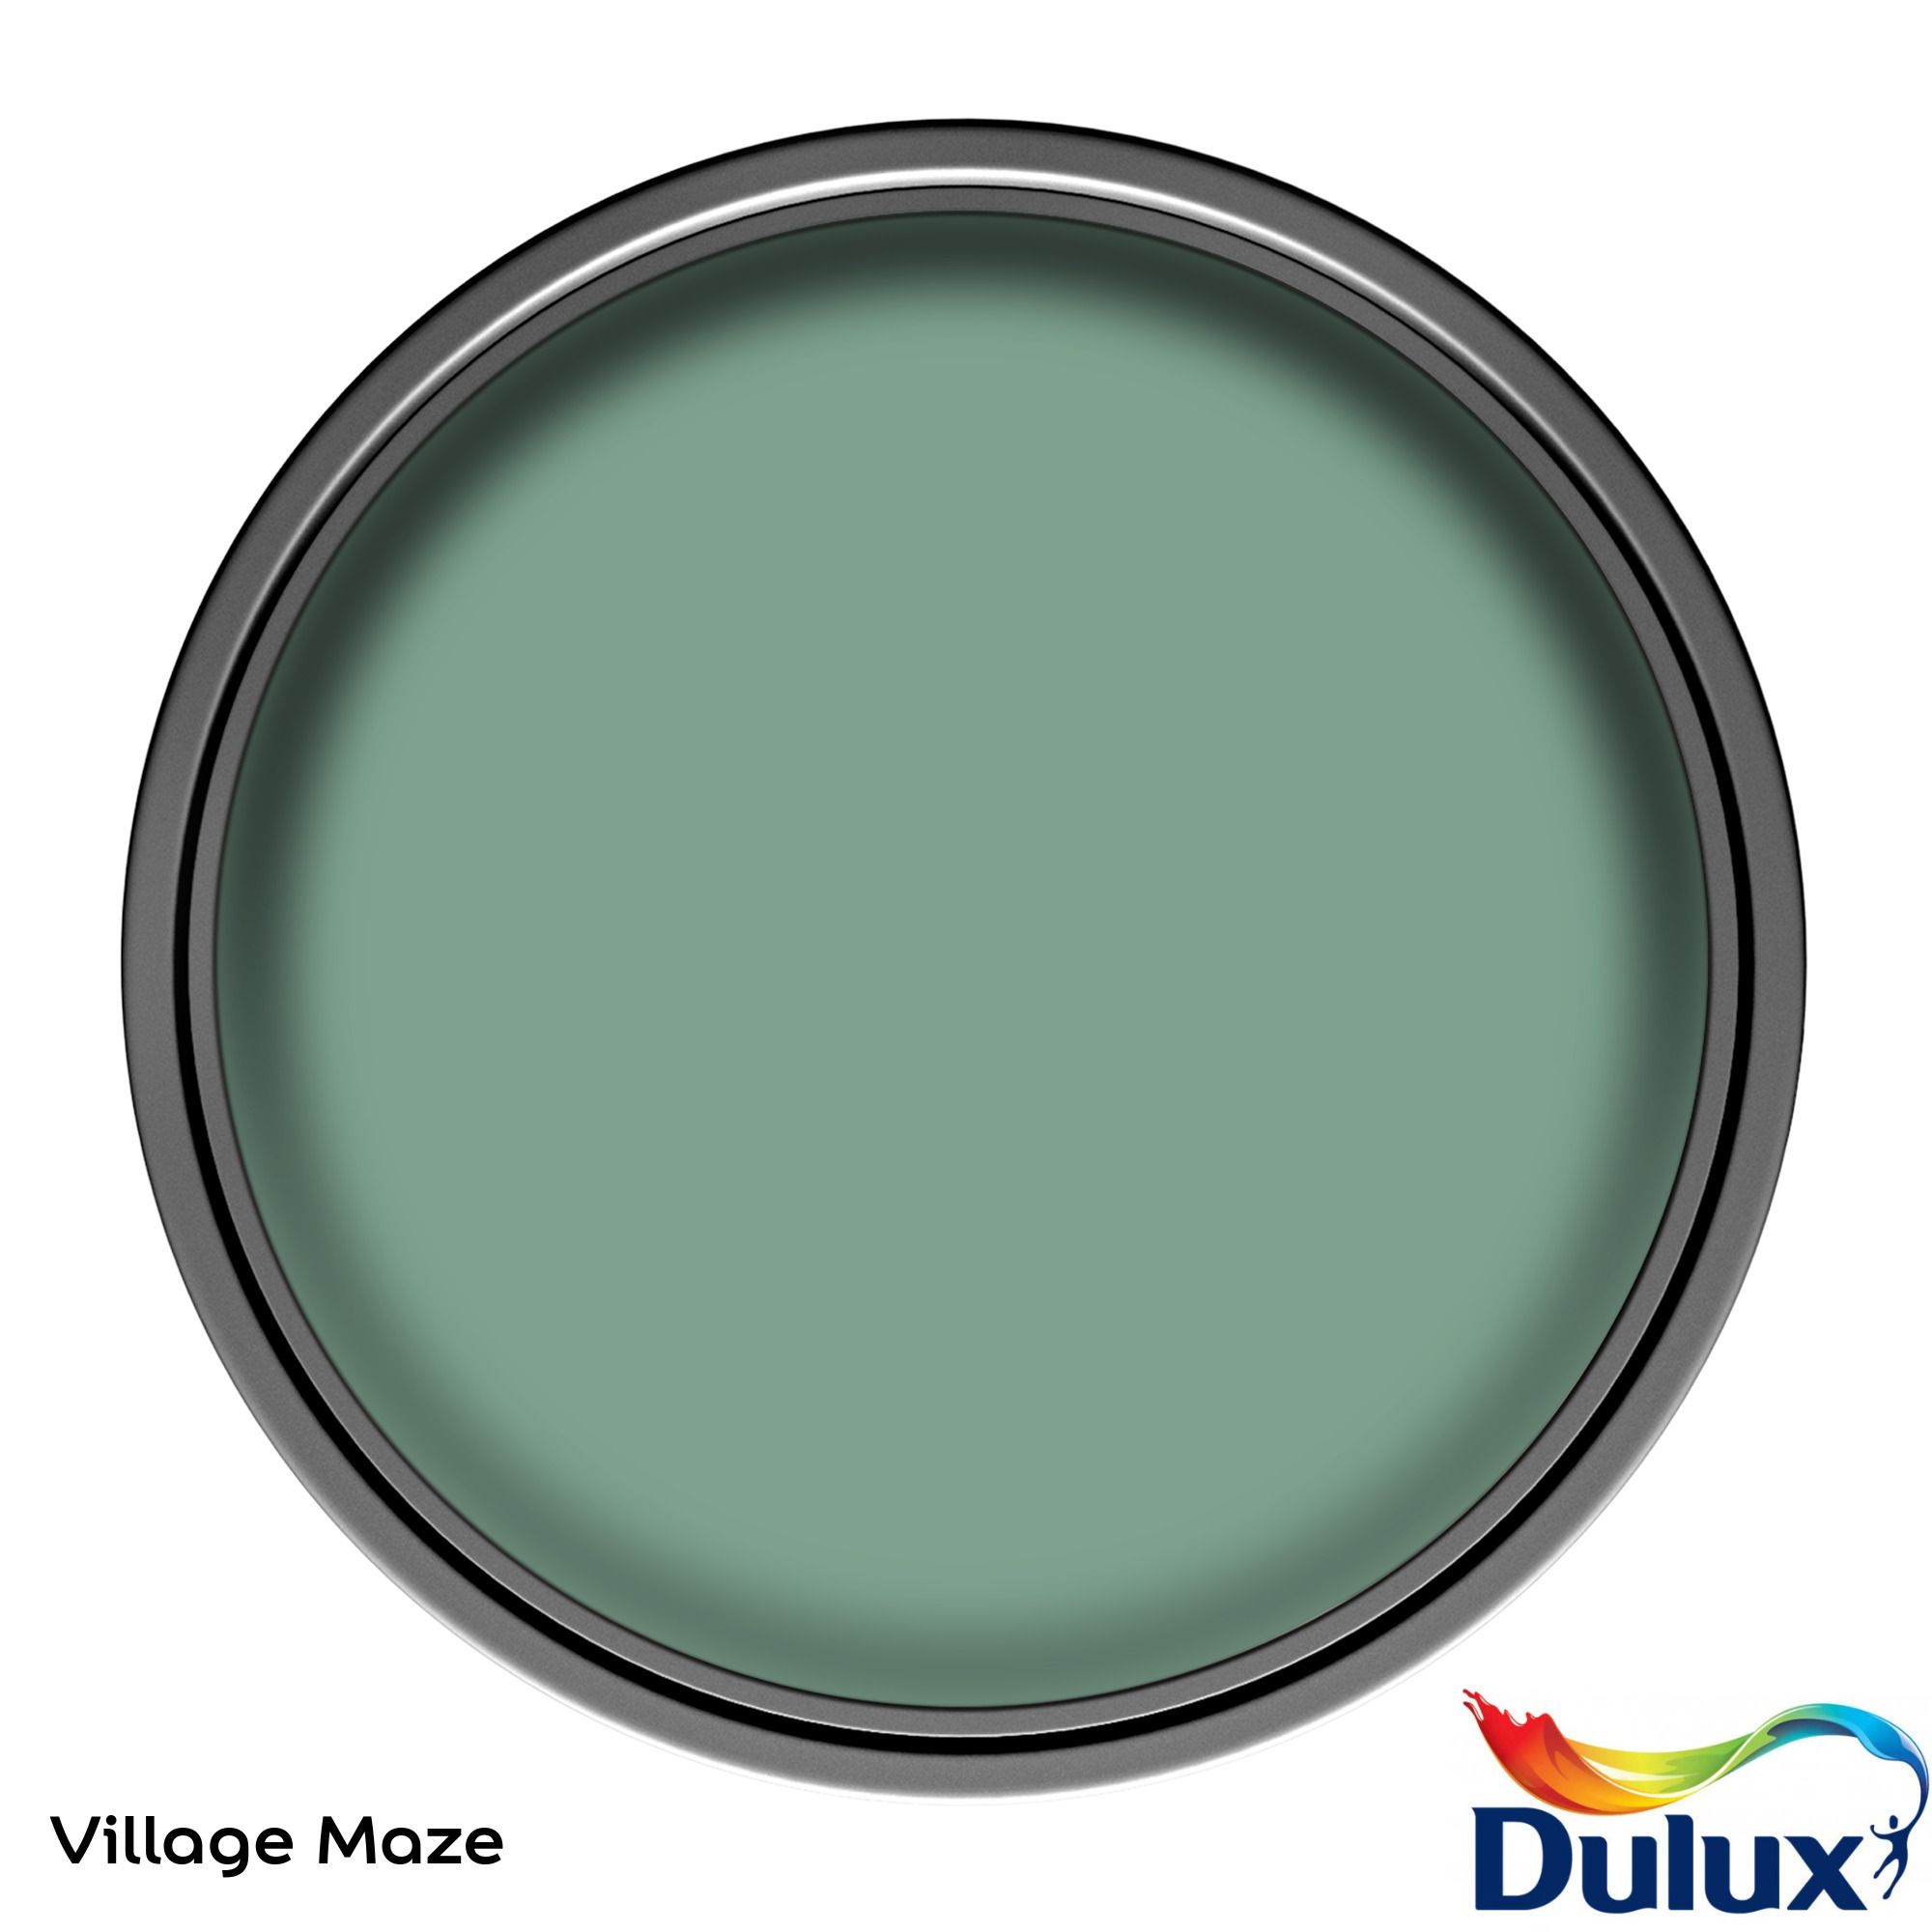 Dulux Easycare Village Maze Matt Wall paint, 2.5L